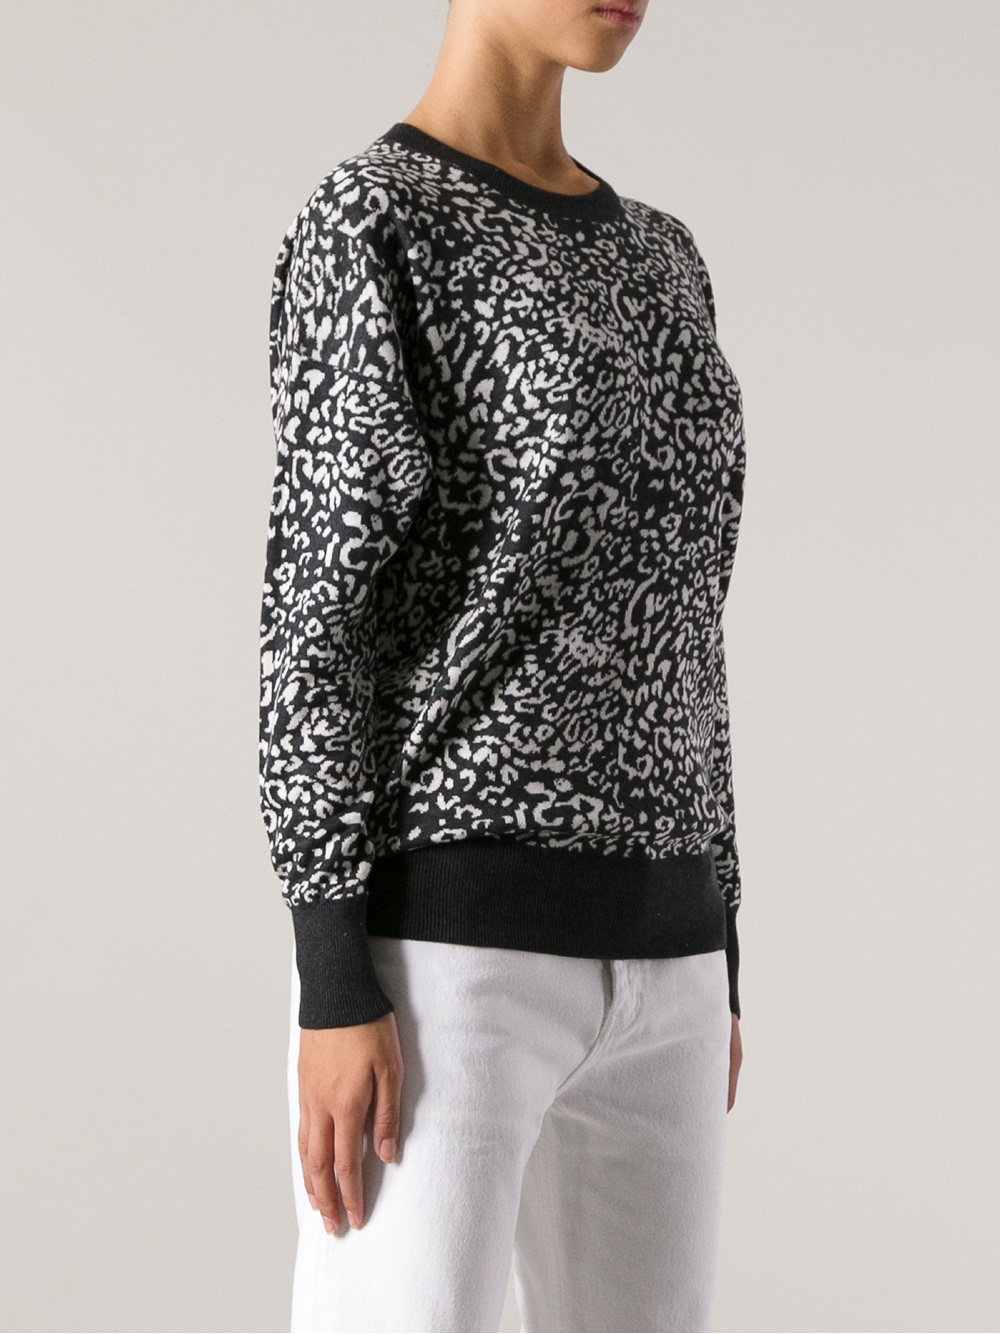 DKNY Dkny Leopard Print Sweater in Grey (Gray) - Lyst